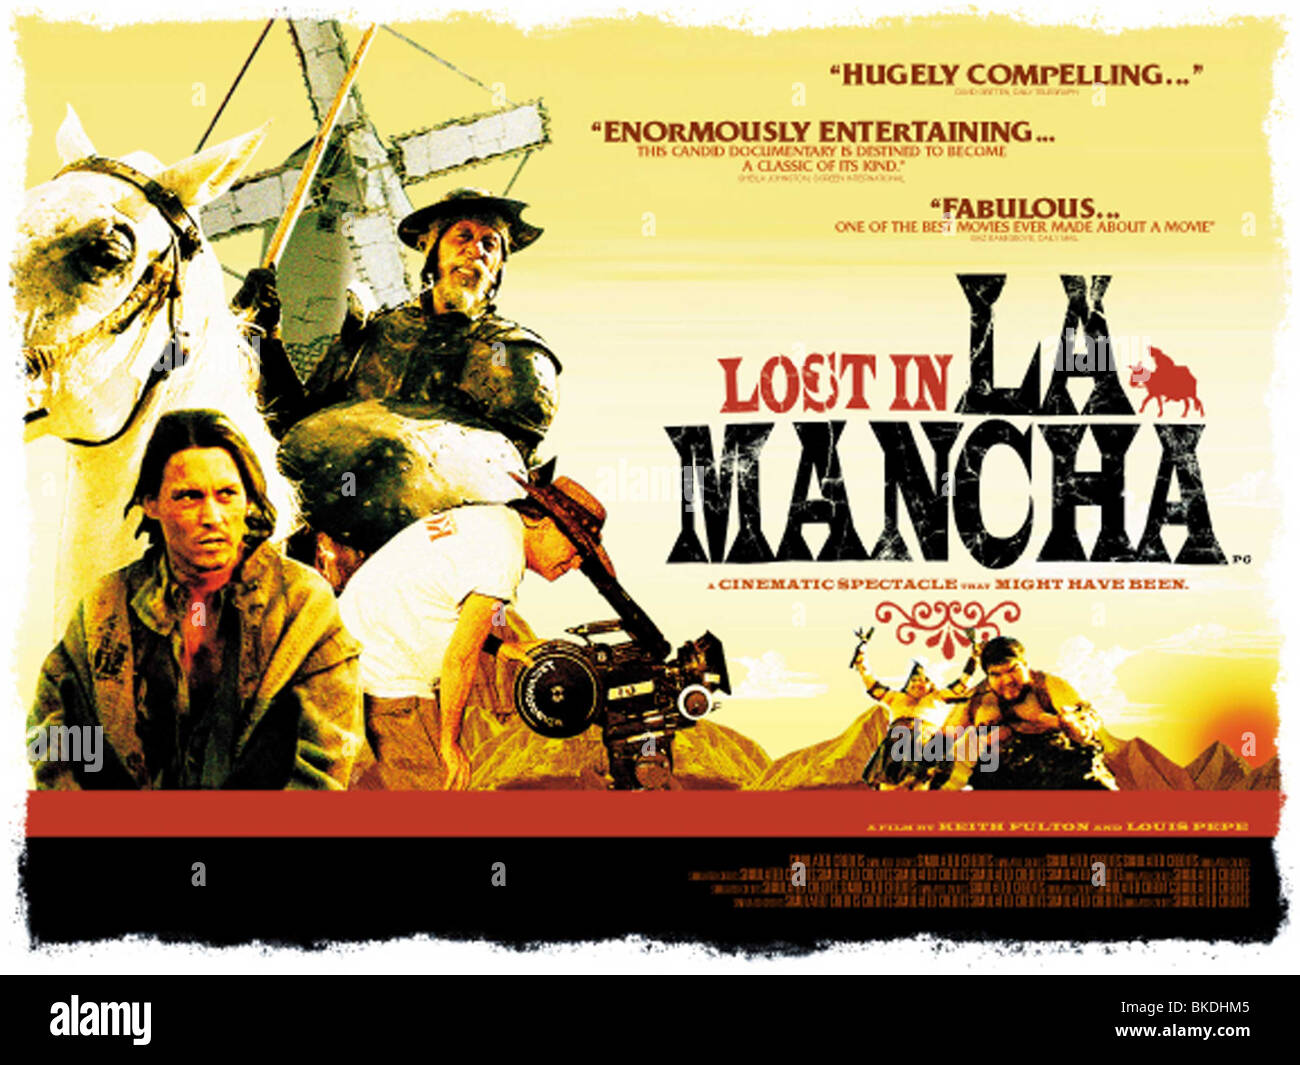 lost-in-la-mancha-2002-documentary-poste